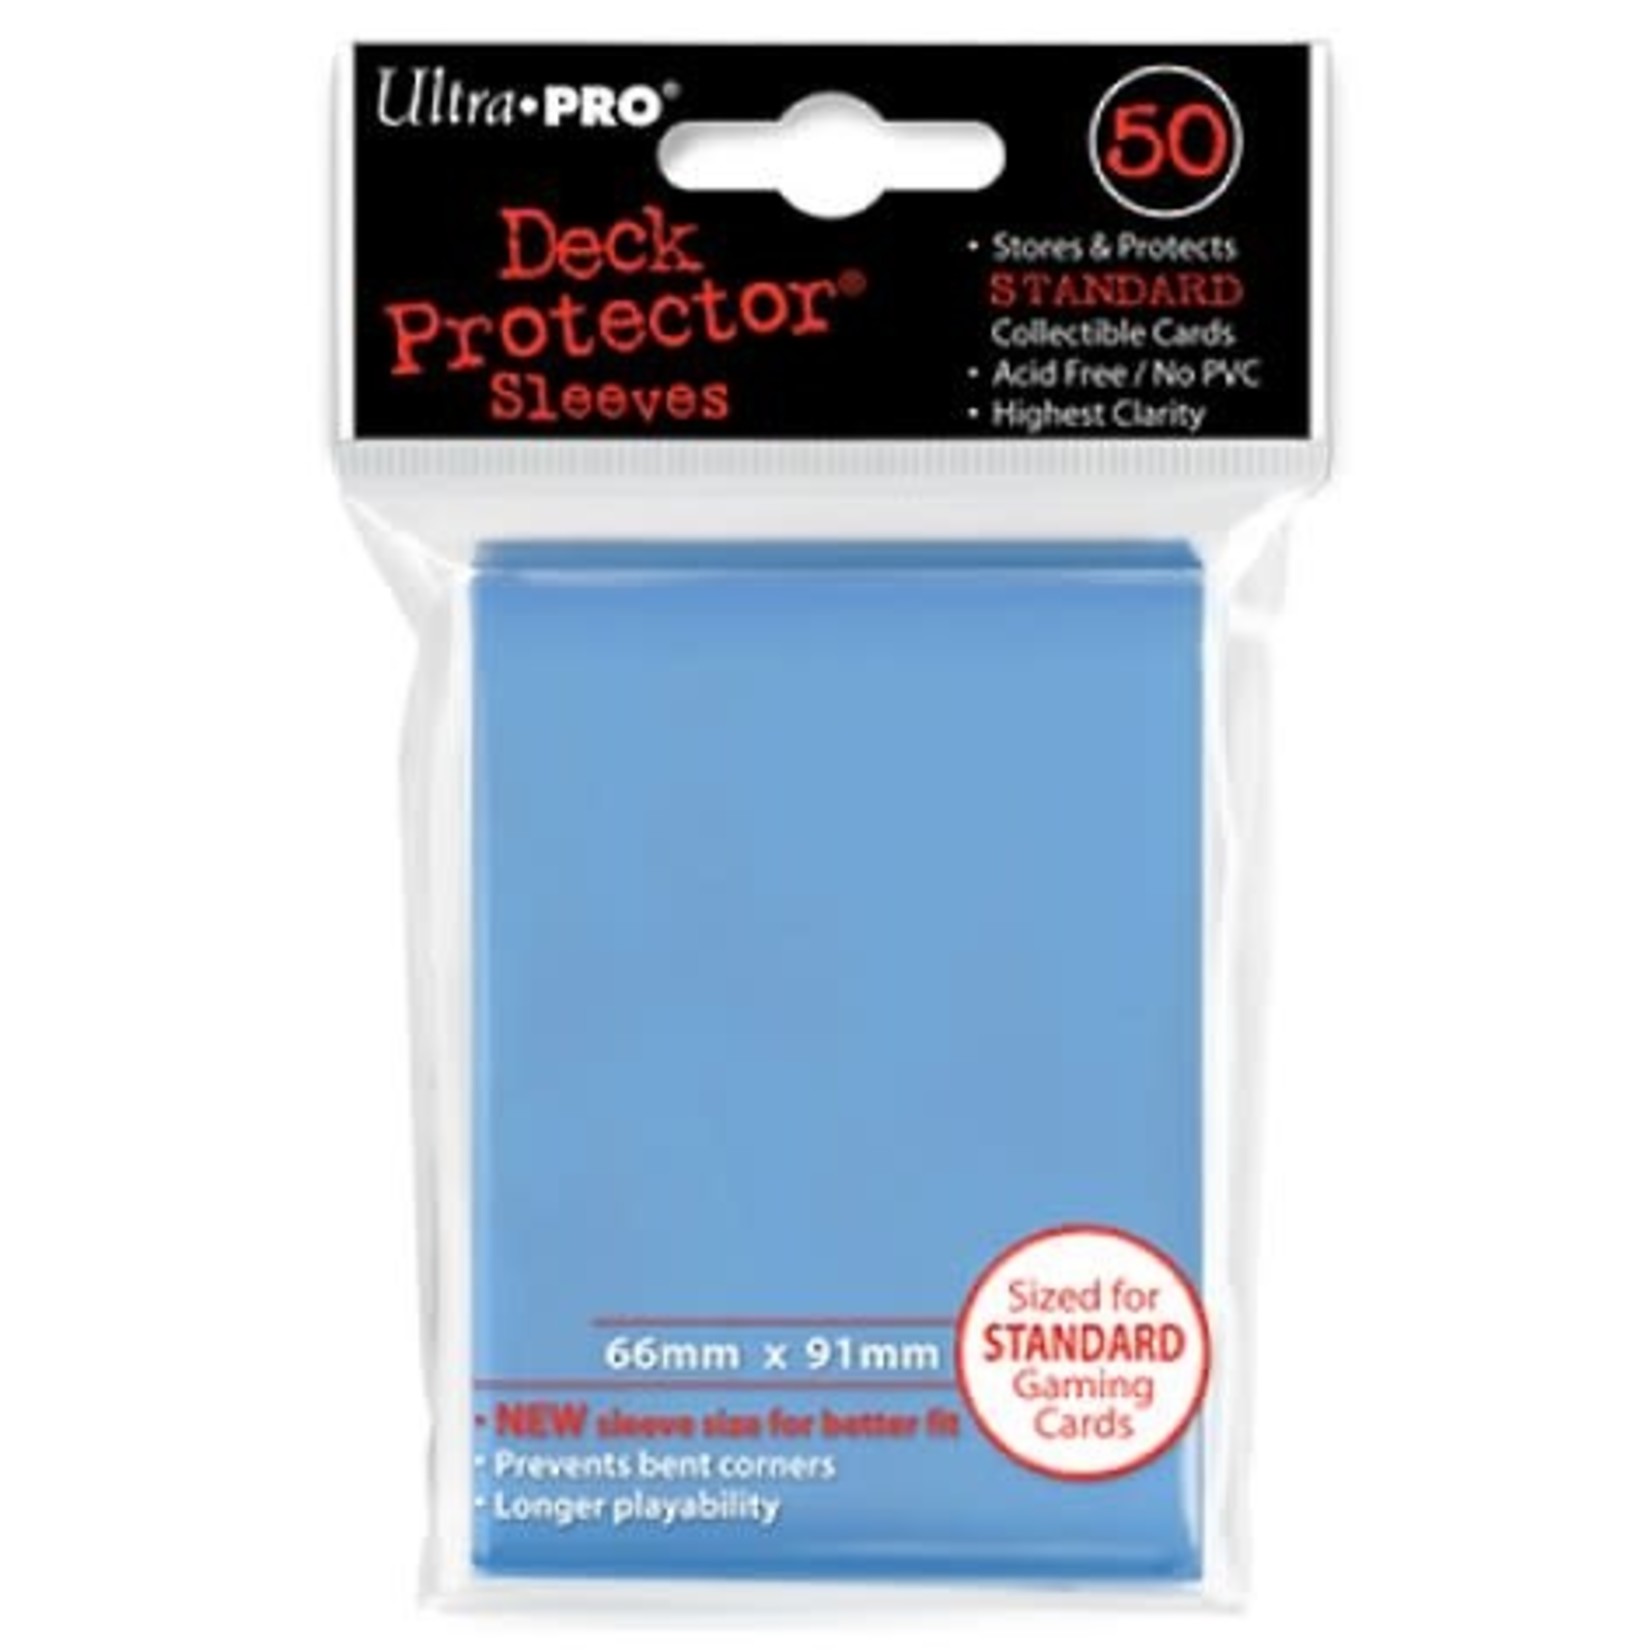 Ultra Pro Pro-Gloss Light Blue Deck Protectors 50-Pack